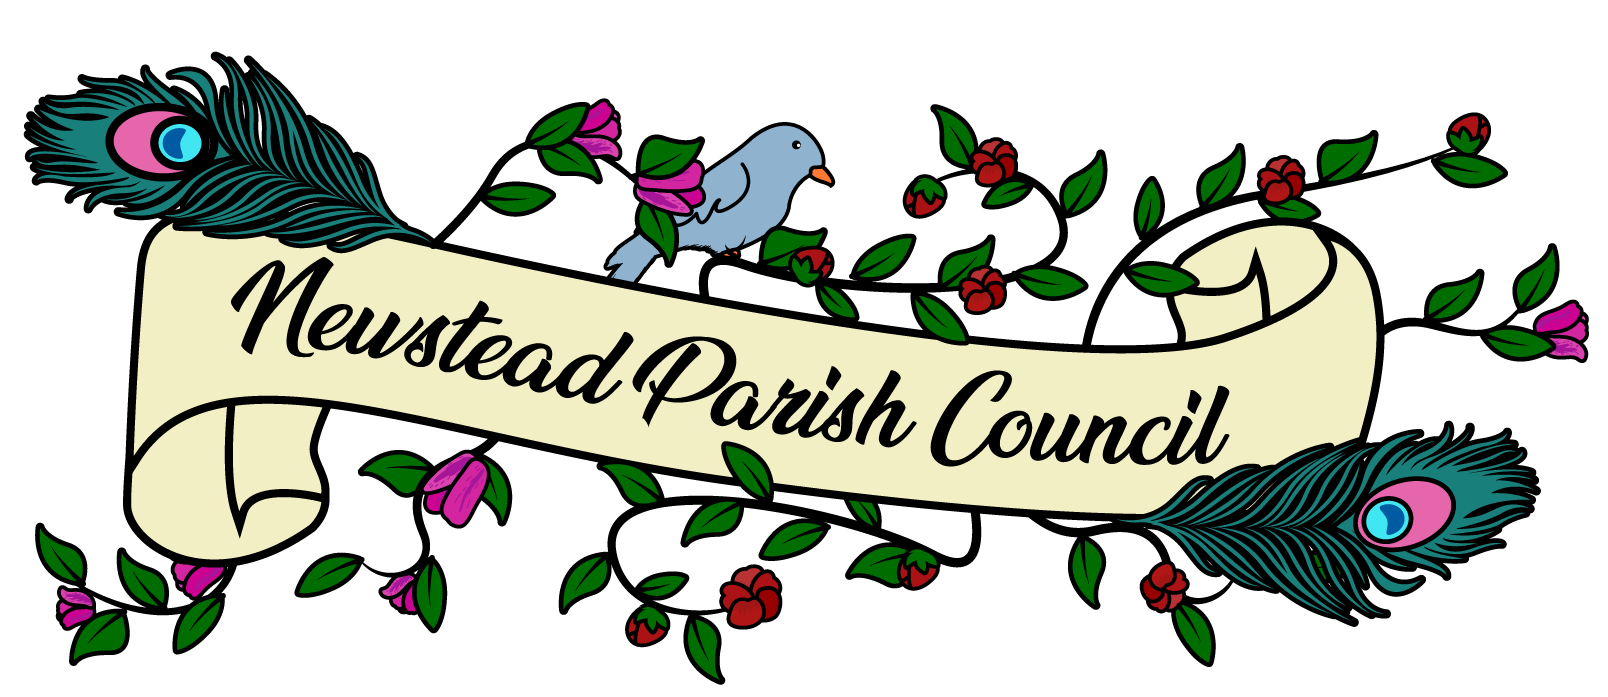 Logo for Newstead Parish Council